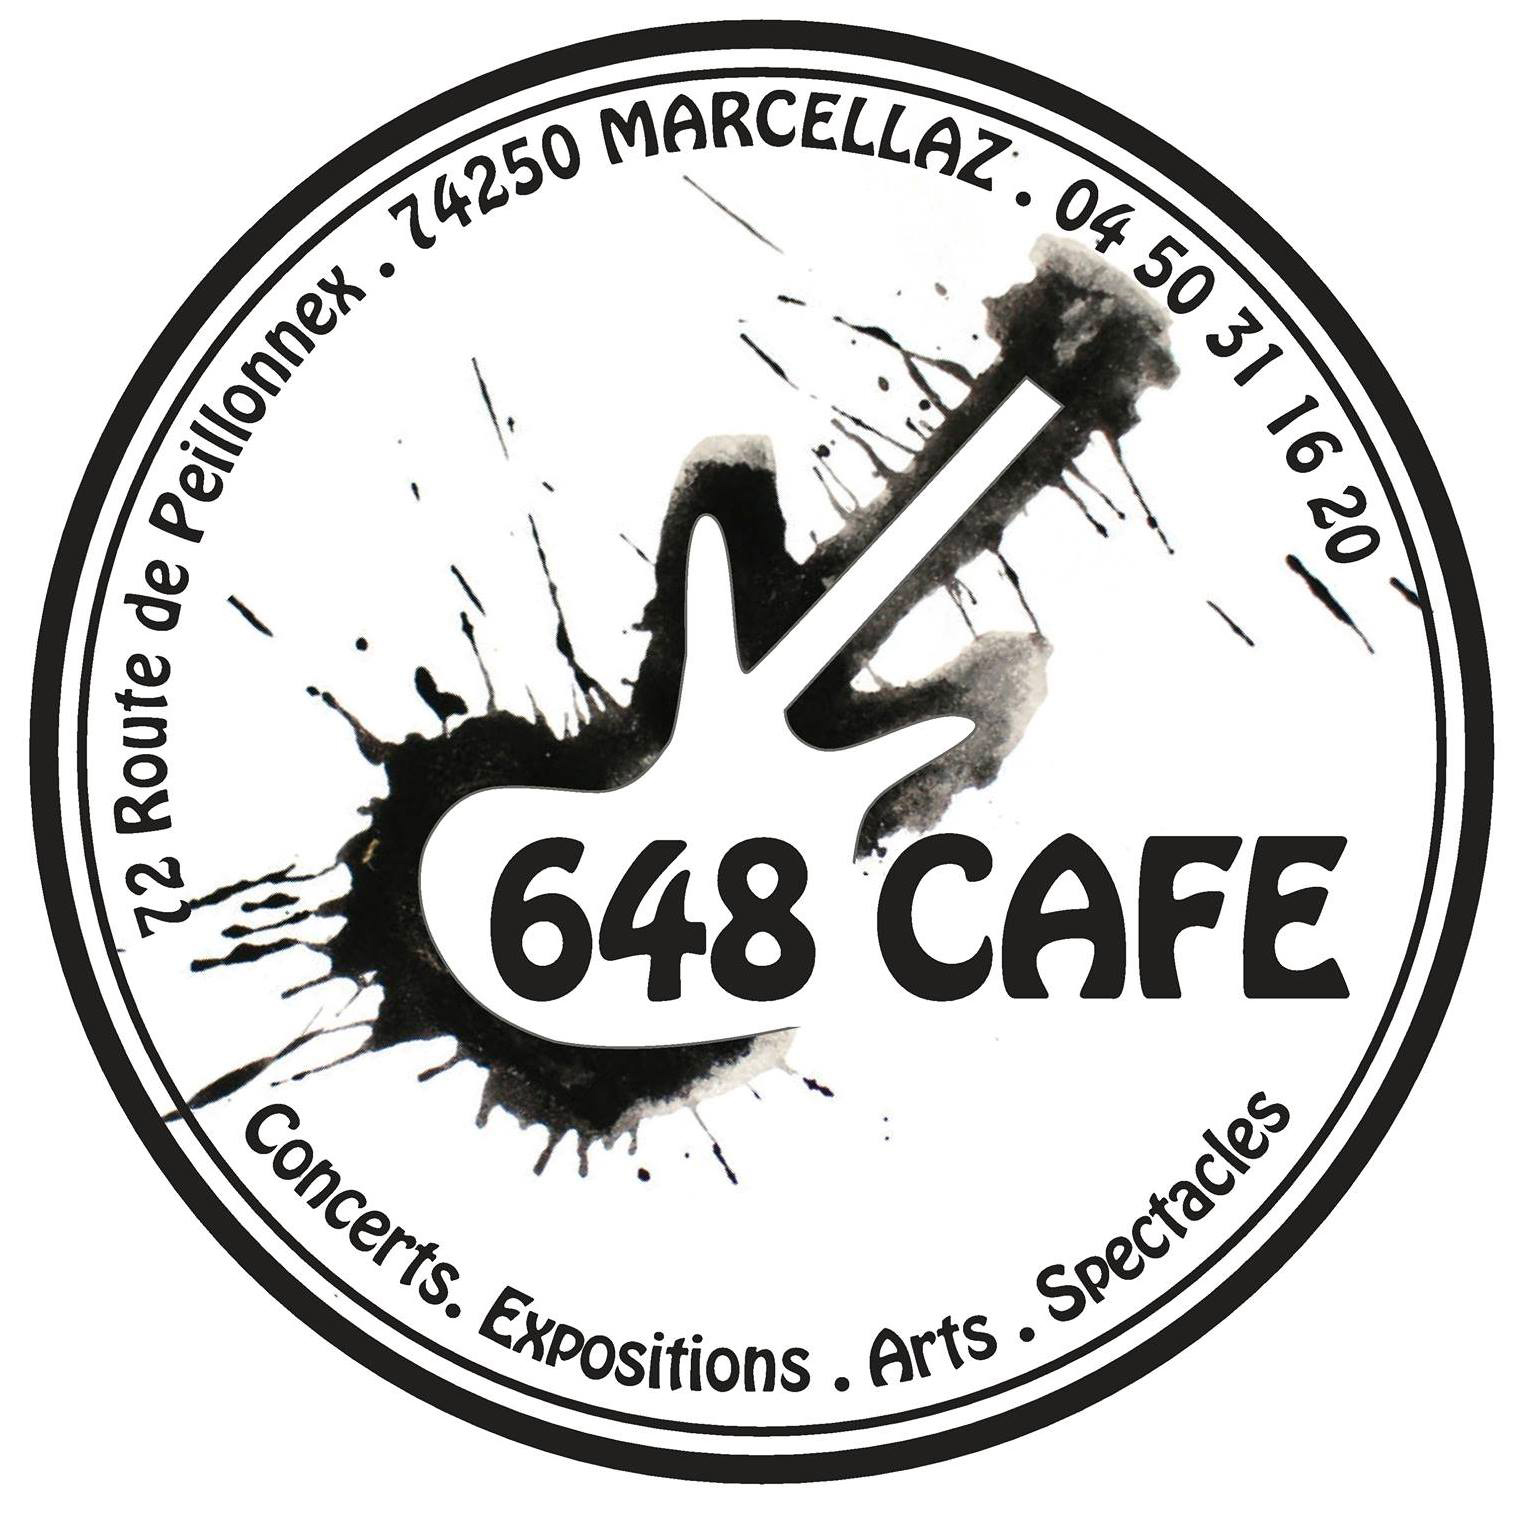 648-cafe-marcellaz.jpg